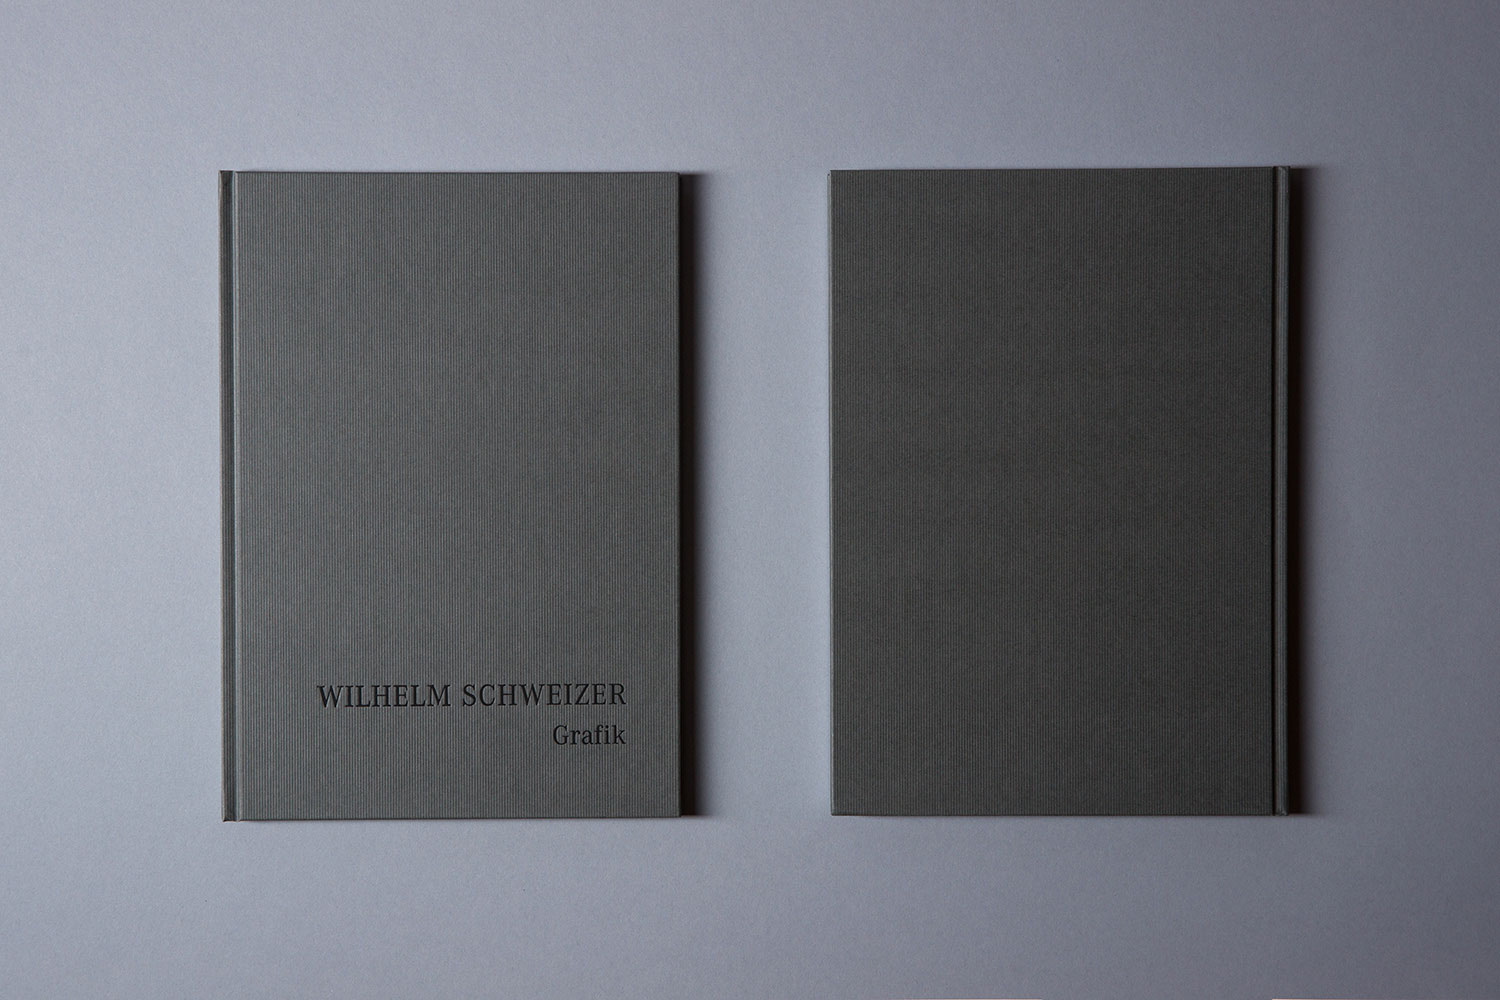 Kunstverein-Coburg-Katalog-Wilhelm-Schweizer-Cover-123-Wagner1972.jpg